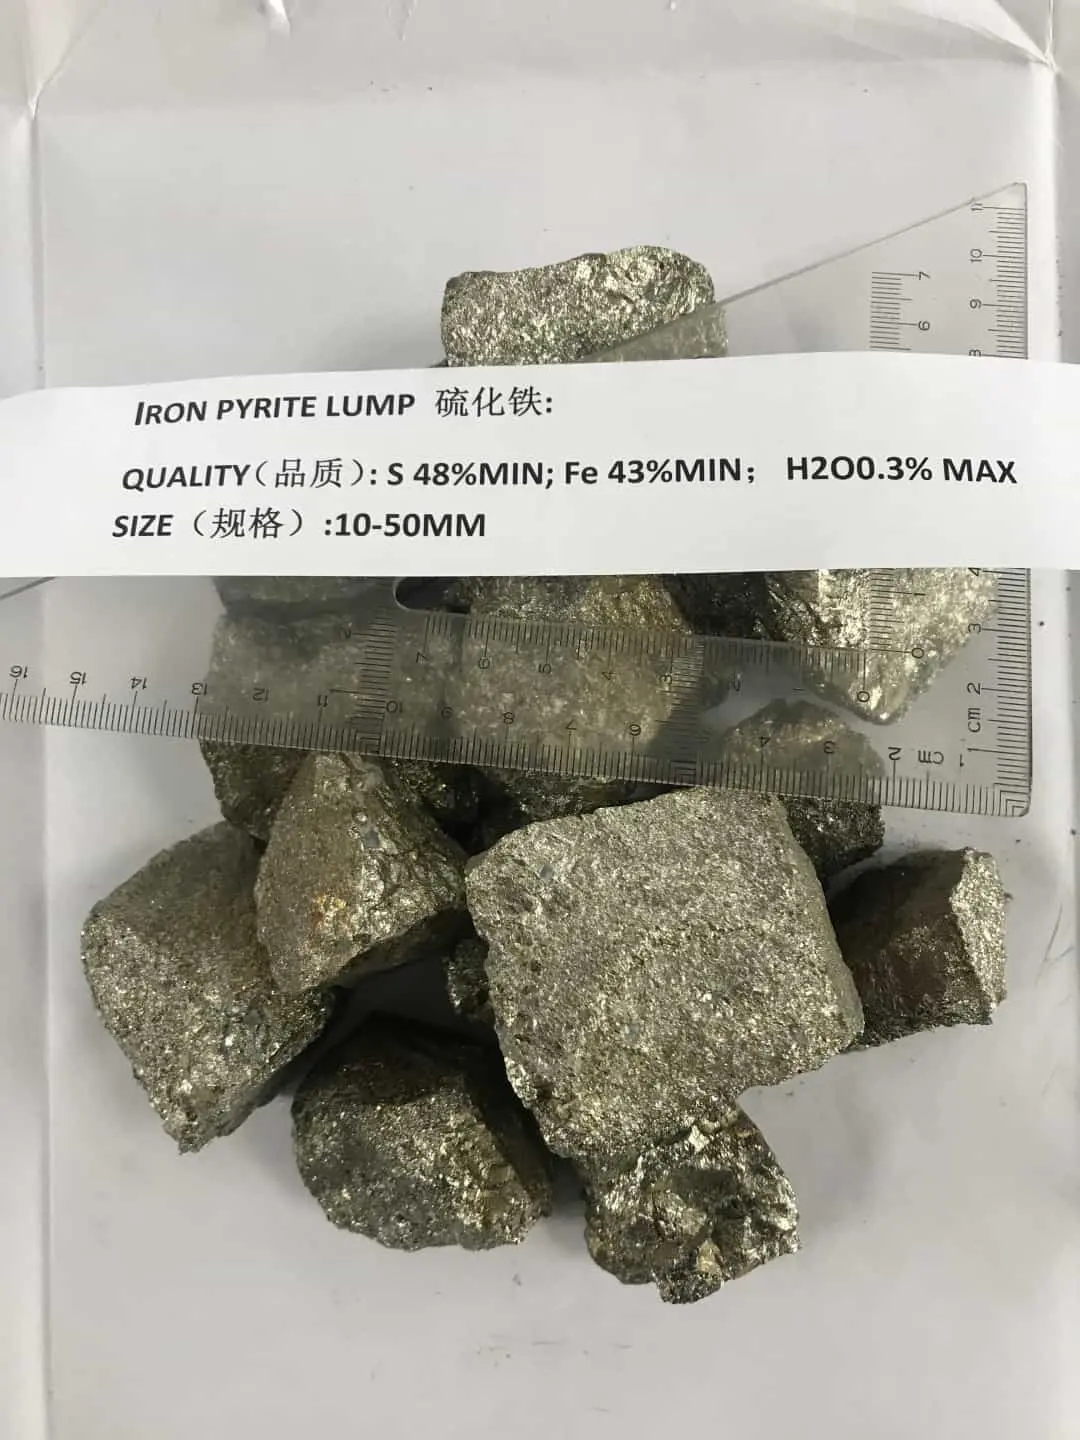 Runlong manufacturer of pyrite blocks for foundry workshops